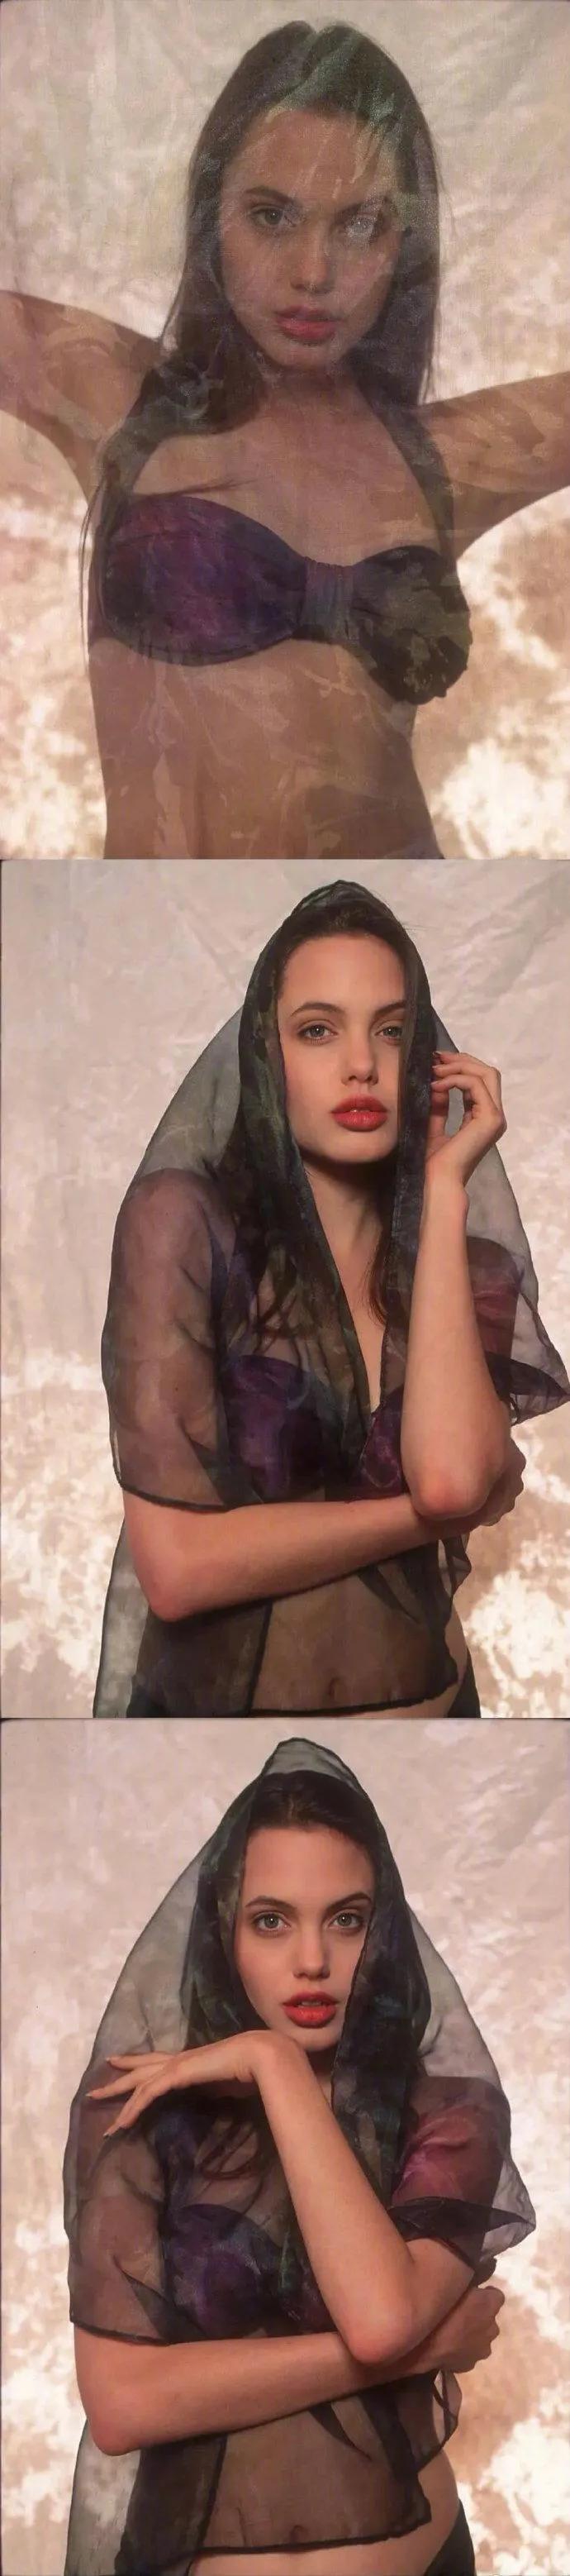 Angelina Jolie Hamley's April 26, 2016 – Star Style